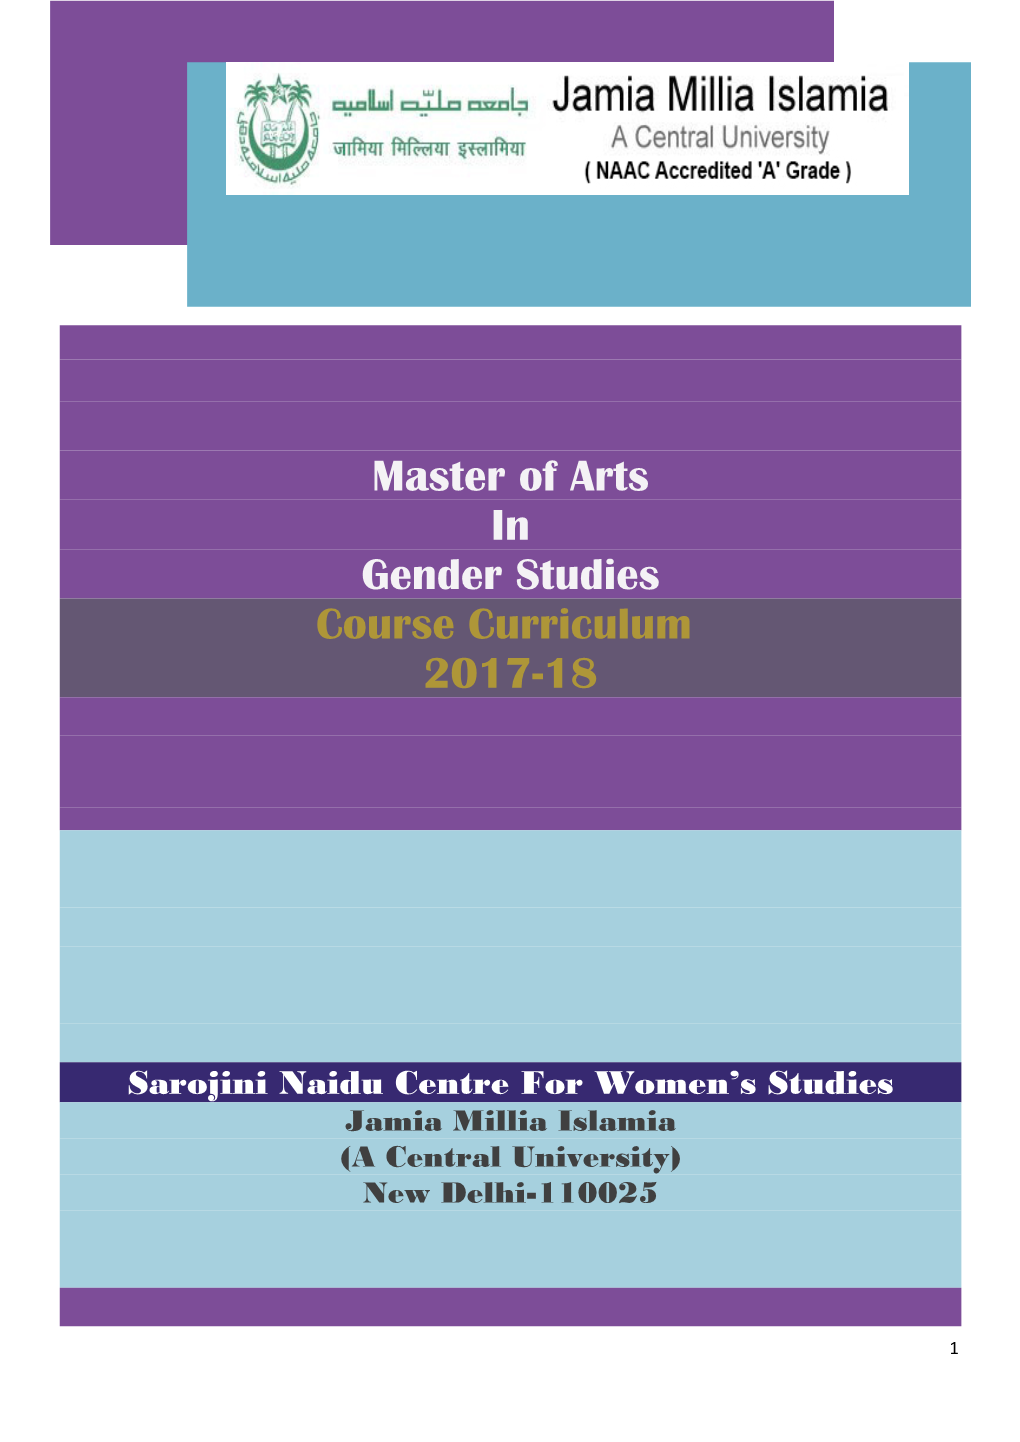 Master of Arts in Gender Studies Course Curriculum 2017-18